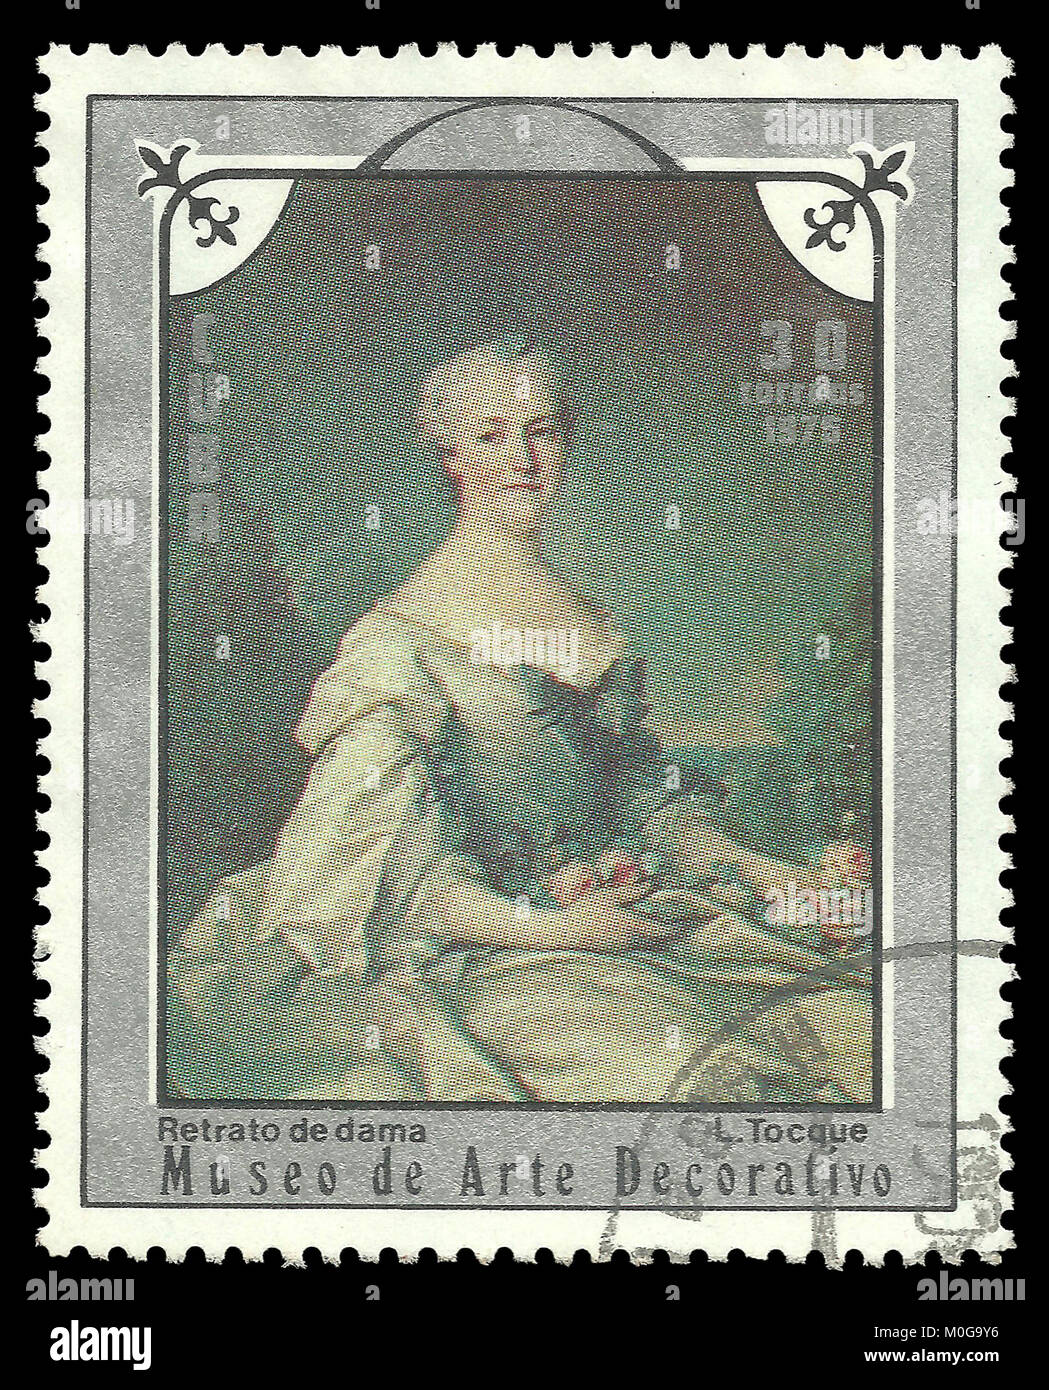 Cuba - stamp 1975: Color edition on Decorative Art Museum, shows Portrait of a Lady by Louis Tocque Stock Photo